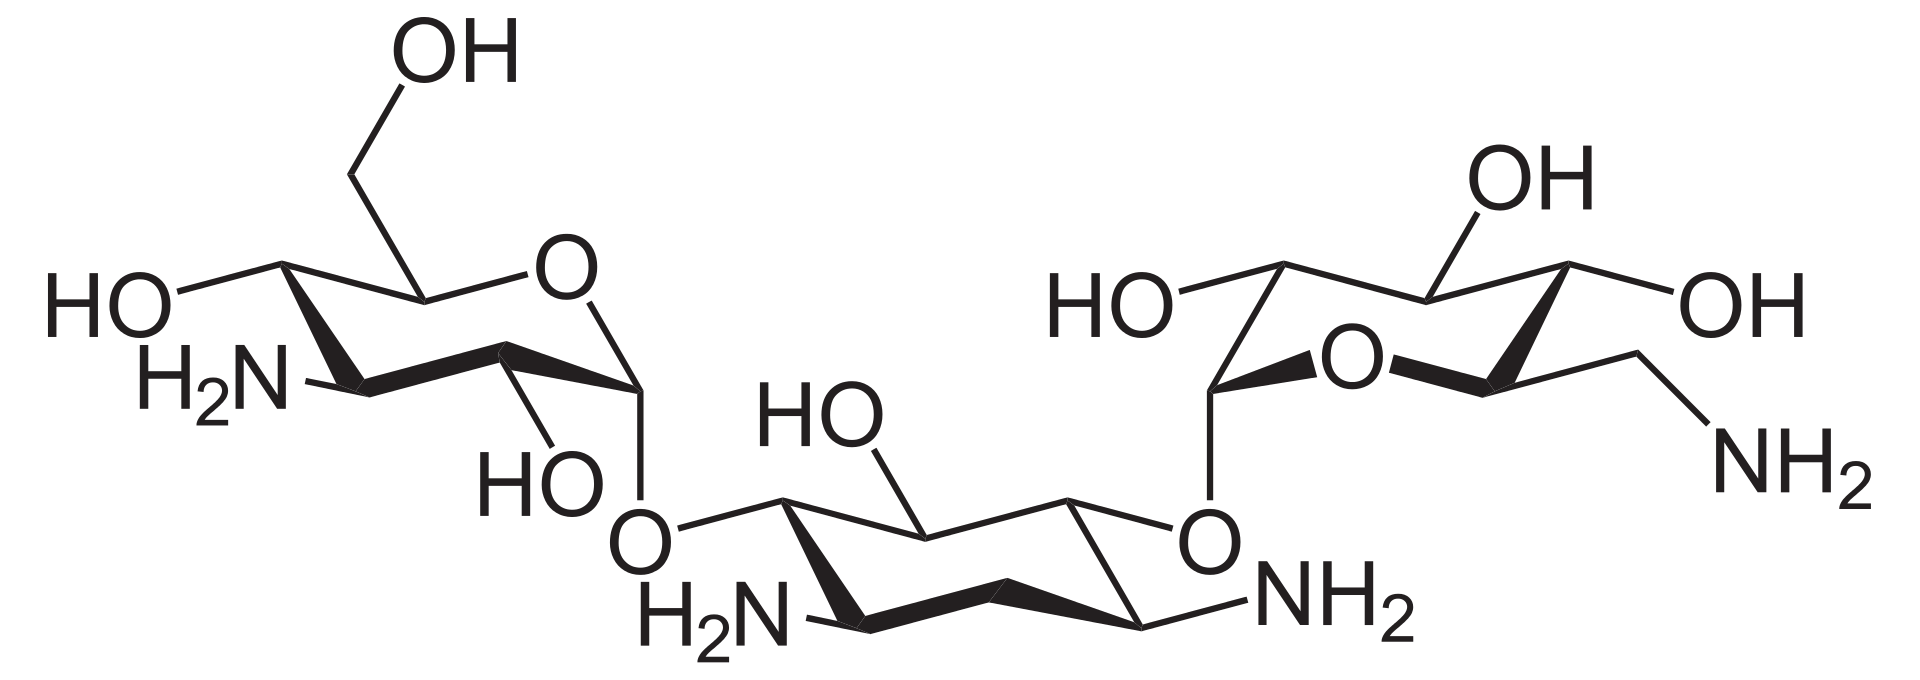 Kanamycin structure